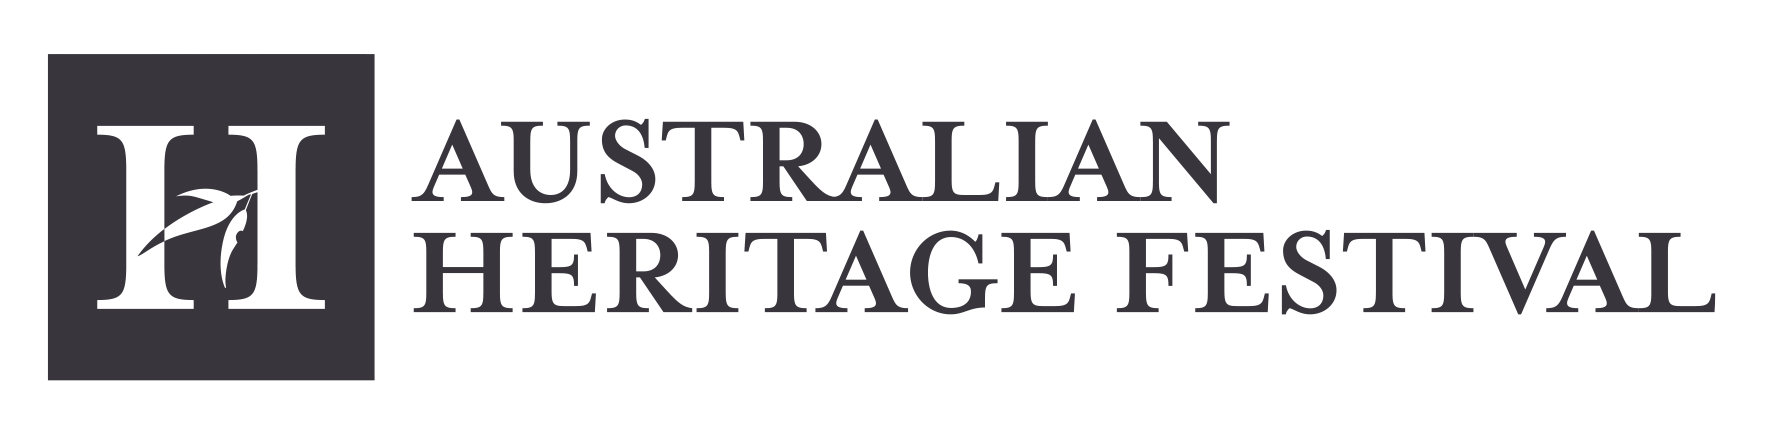 Australian-Heritage-Festival_Tertiary_CHARCOAL.png